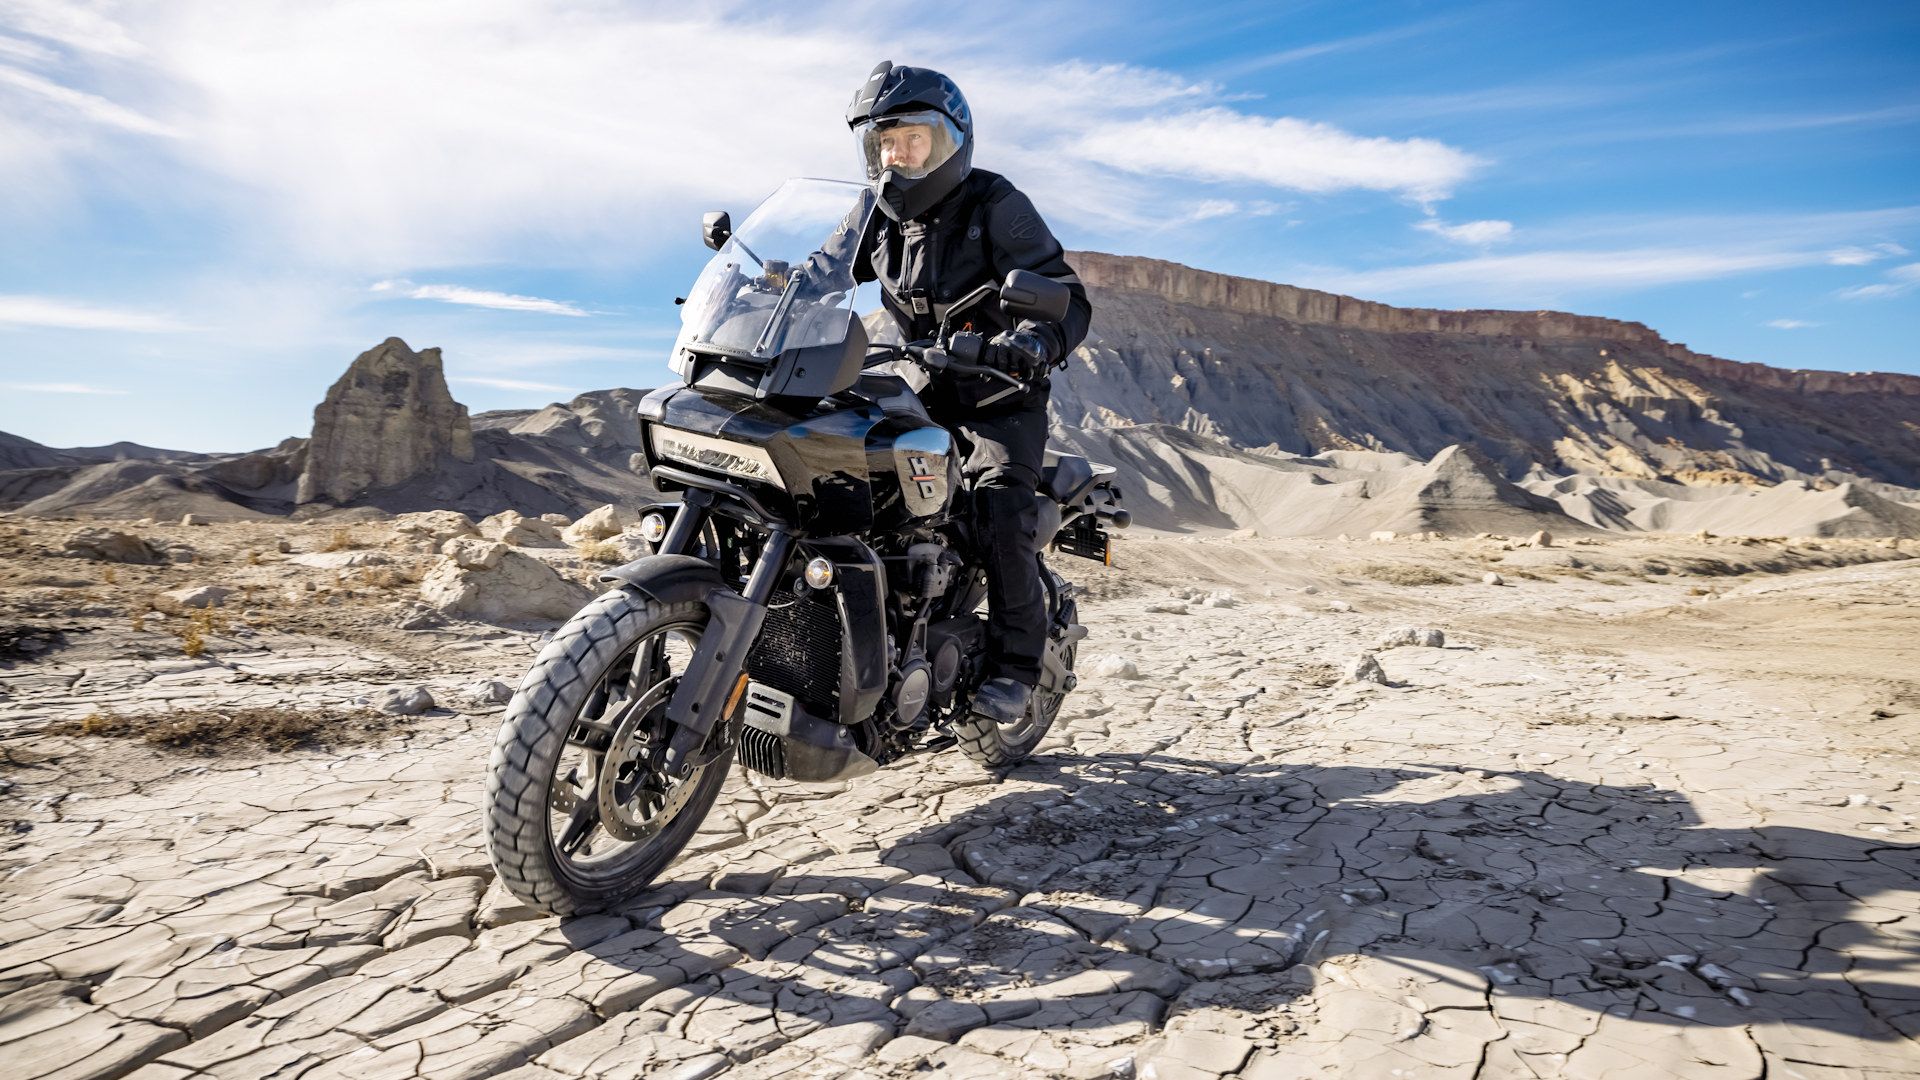 Black Harley-Davidson Pan America 1250 riding in the desert